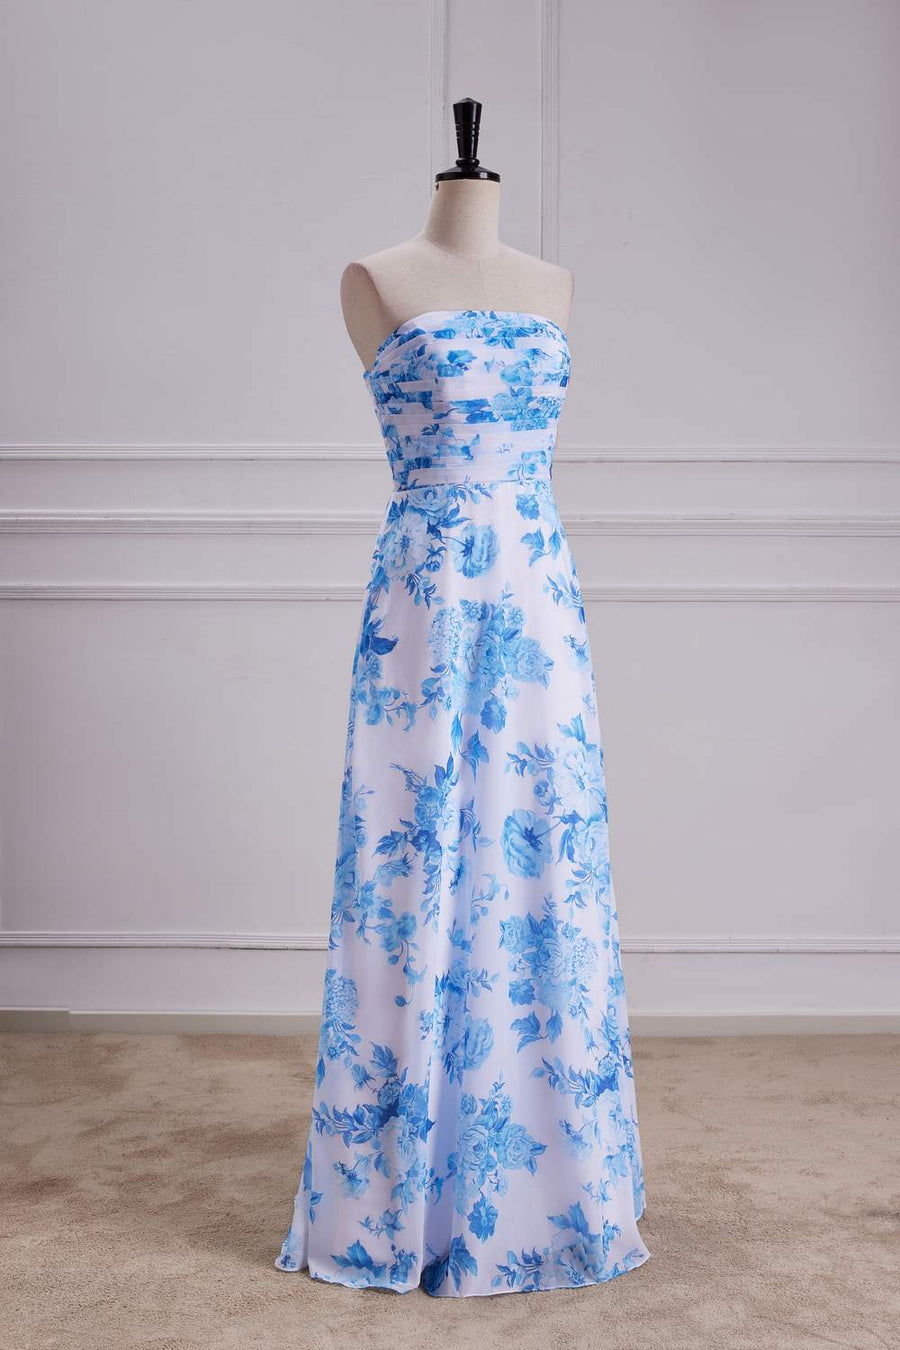 Blue Floral Strapless A-line Long Bridesmaid Dress left facing front side full shot